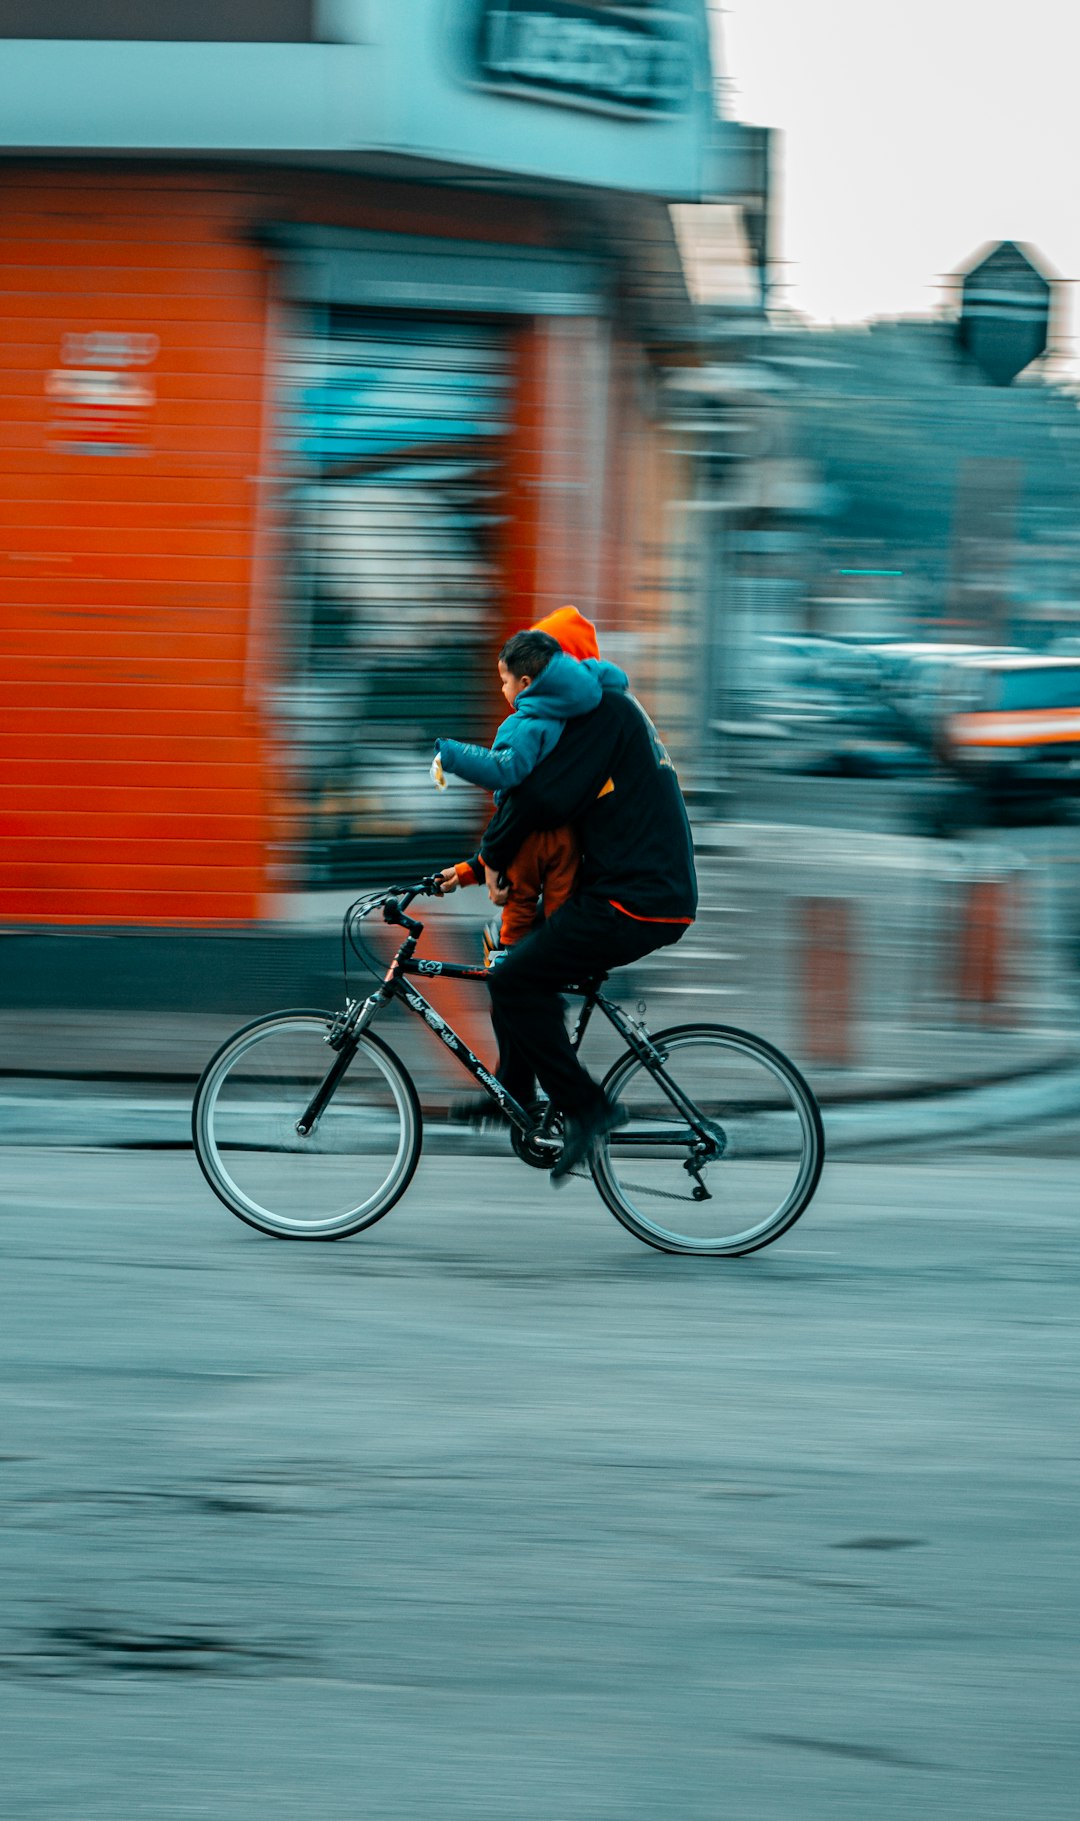 man in black jacket riding on black bicycle